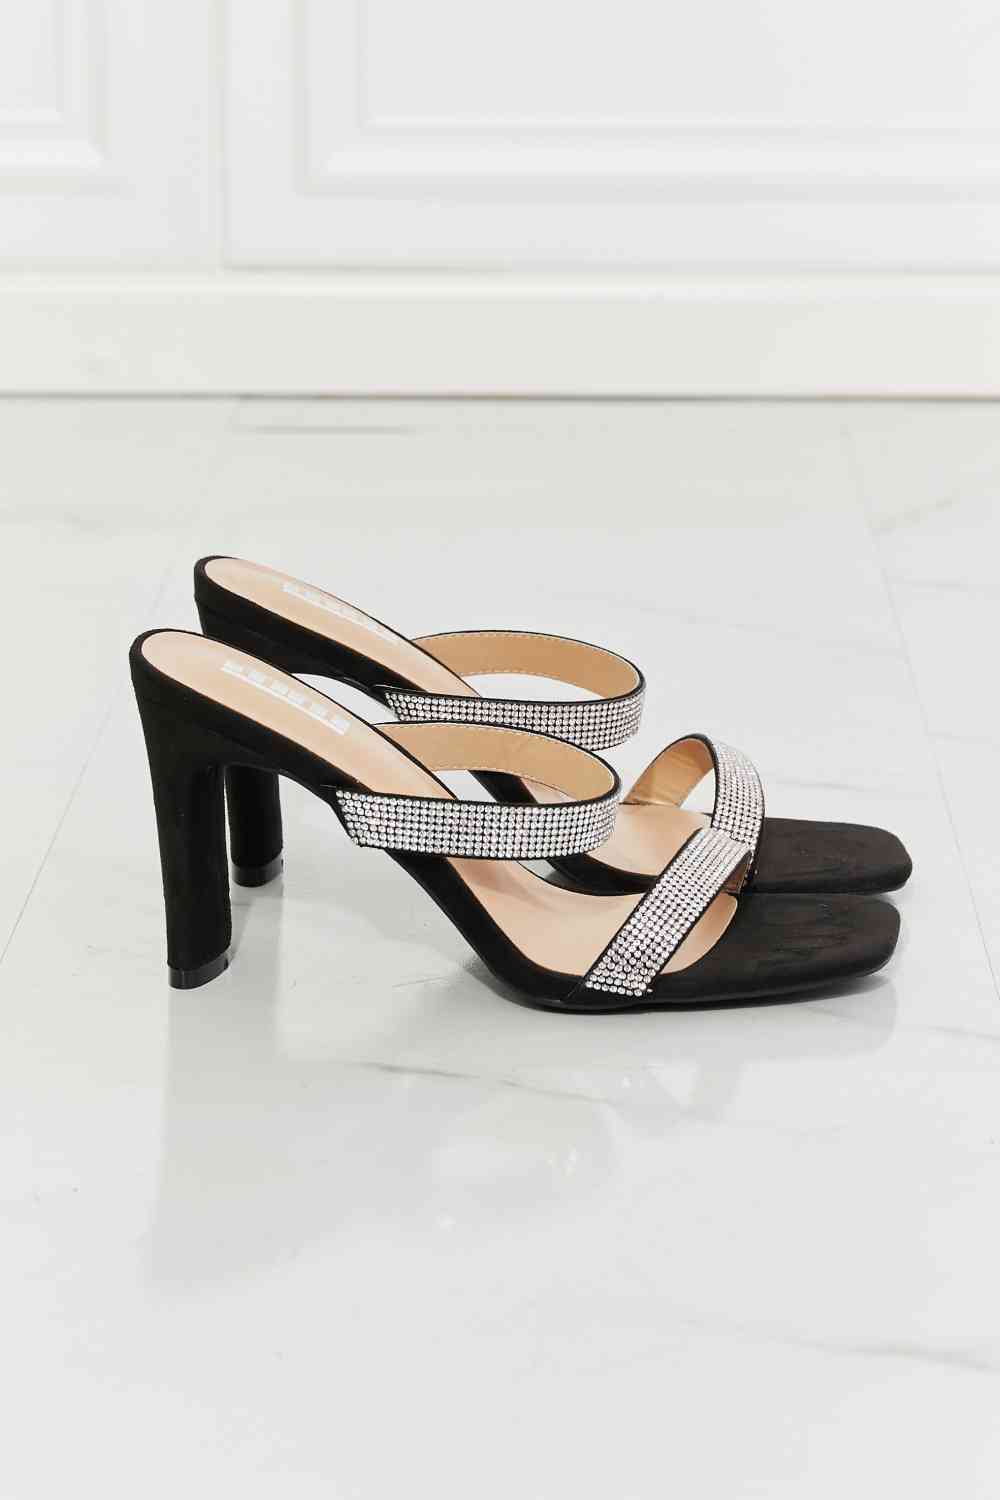 Leave A Little Sparkle Rhinestone Block Heel Sandal in Black - Accessories - Shoes - 5 - 2024